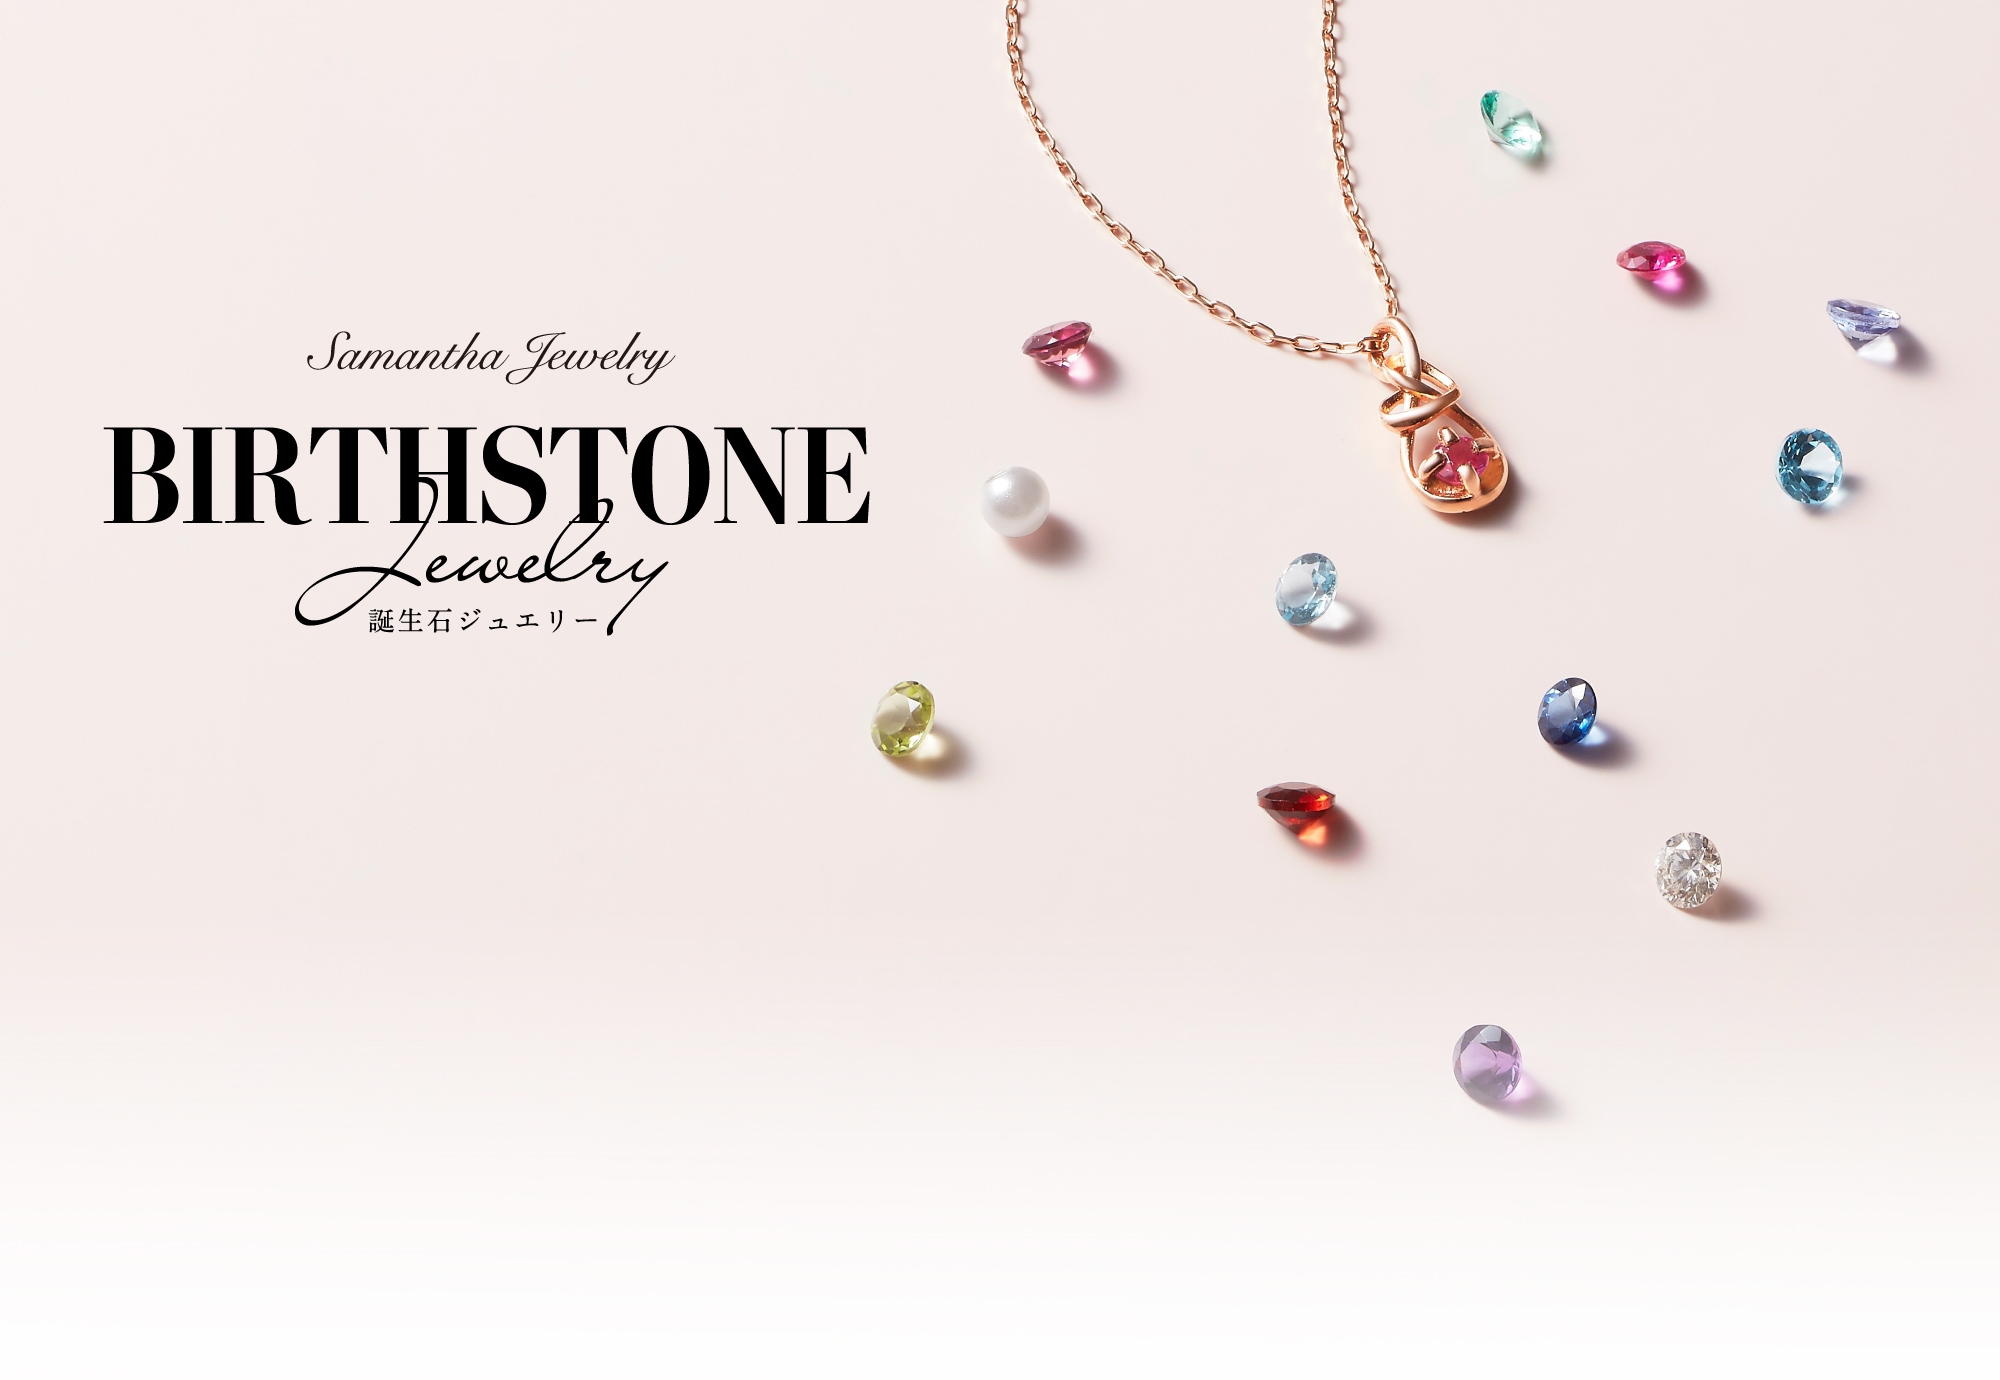 Samantha Tiara Birthday Stone Jewelry │ サマンサティアラ 誕生石 